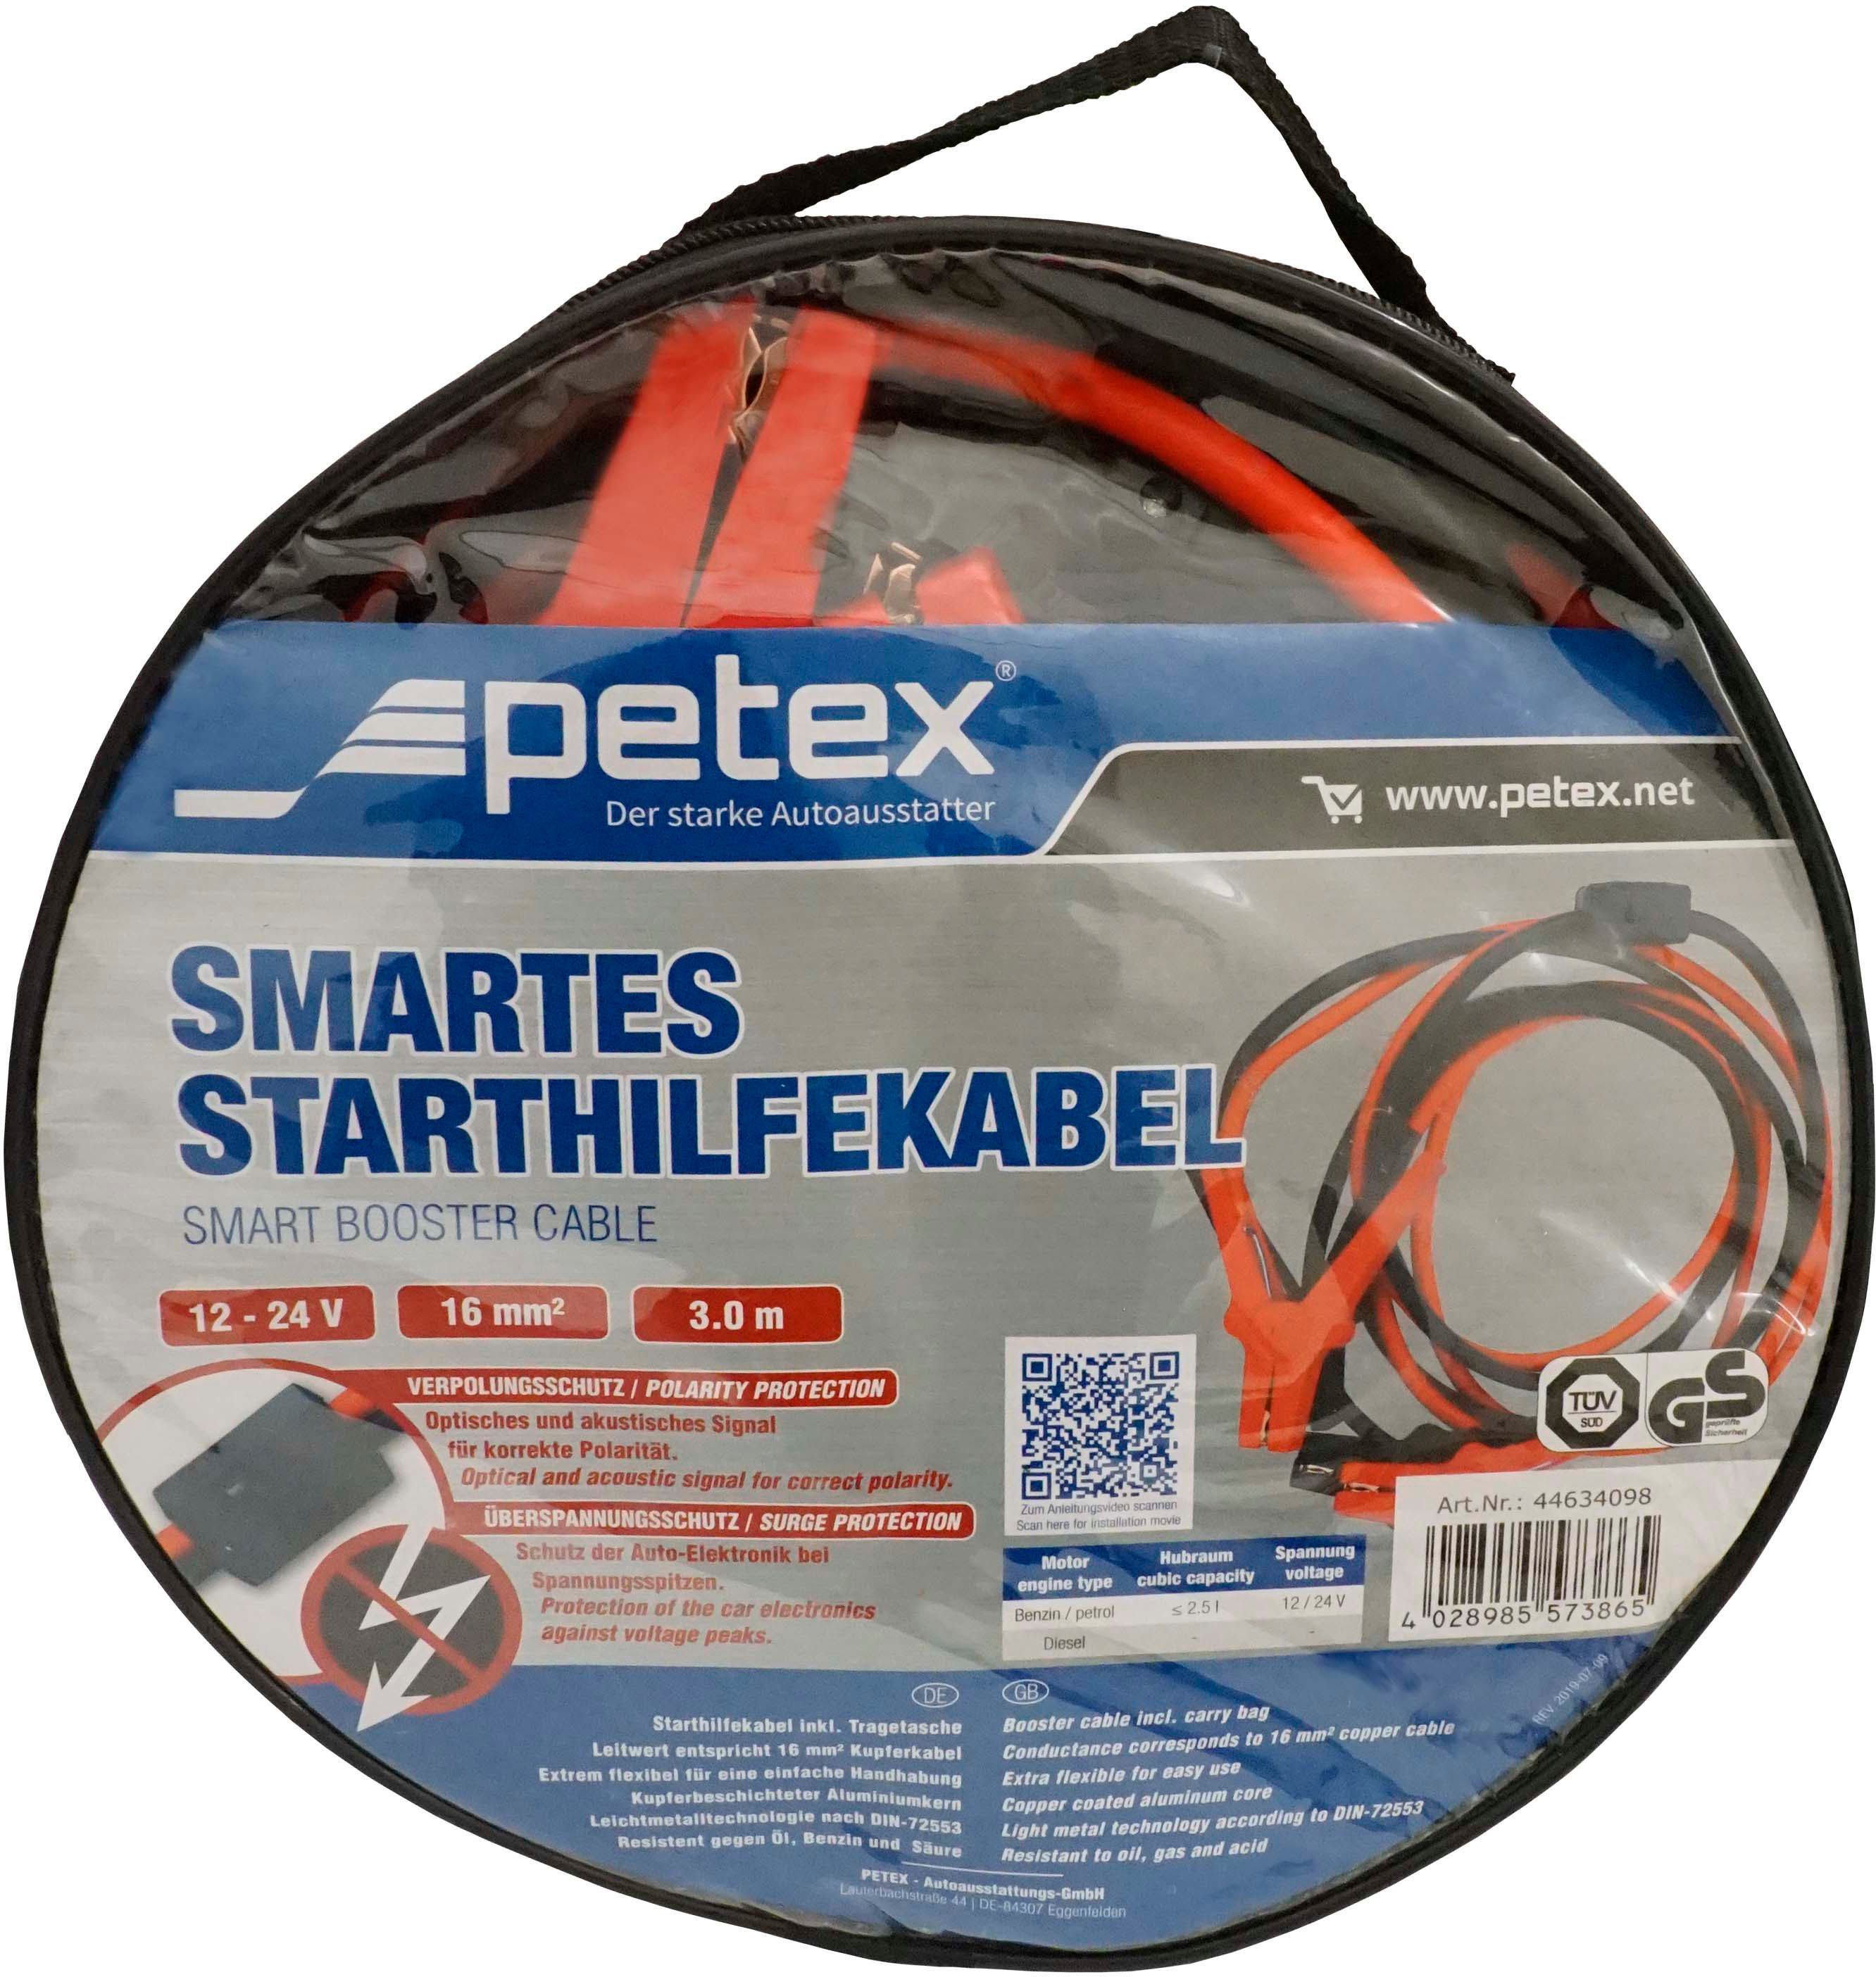 Petex Starthilfekabel, (300 cm), 16 mm², Nennspannung: 12 - 24 Volt | Starthilfekabel